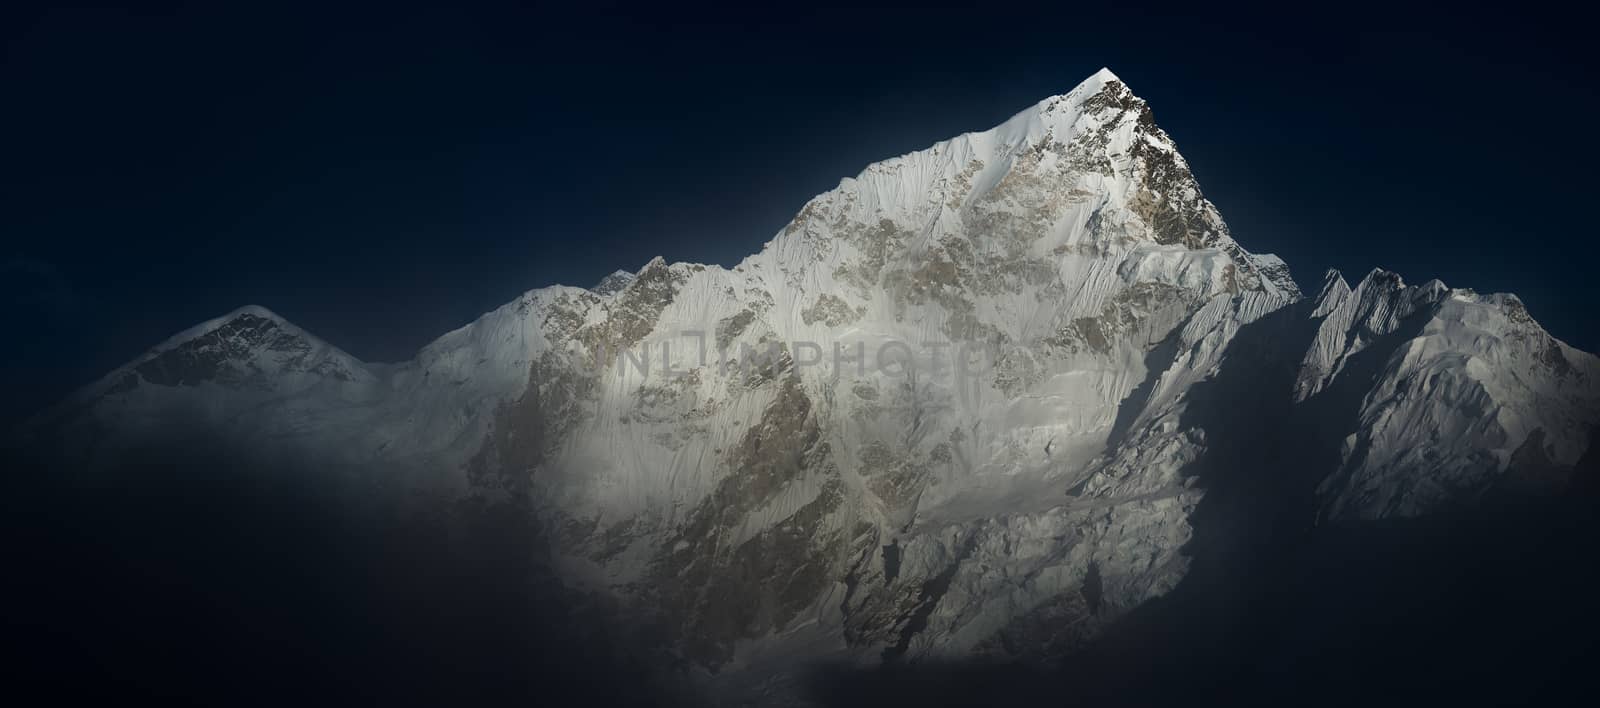 Himalya summits Everest and Nuptse before sunset by Arsgera